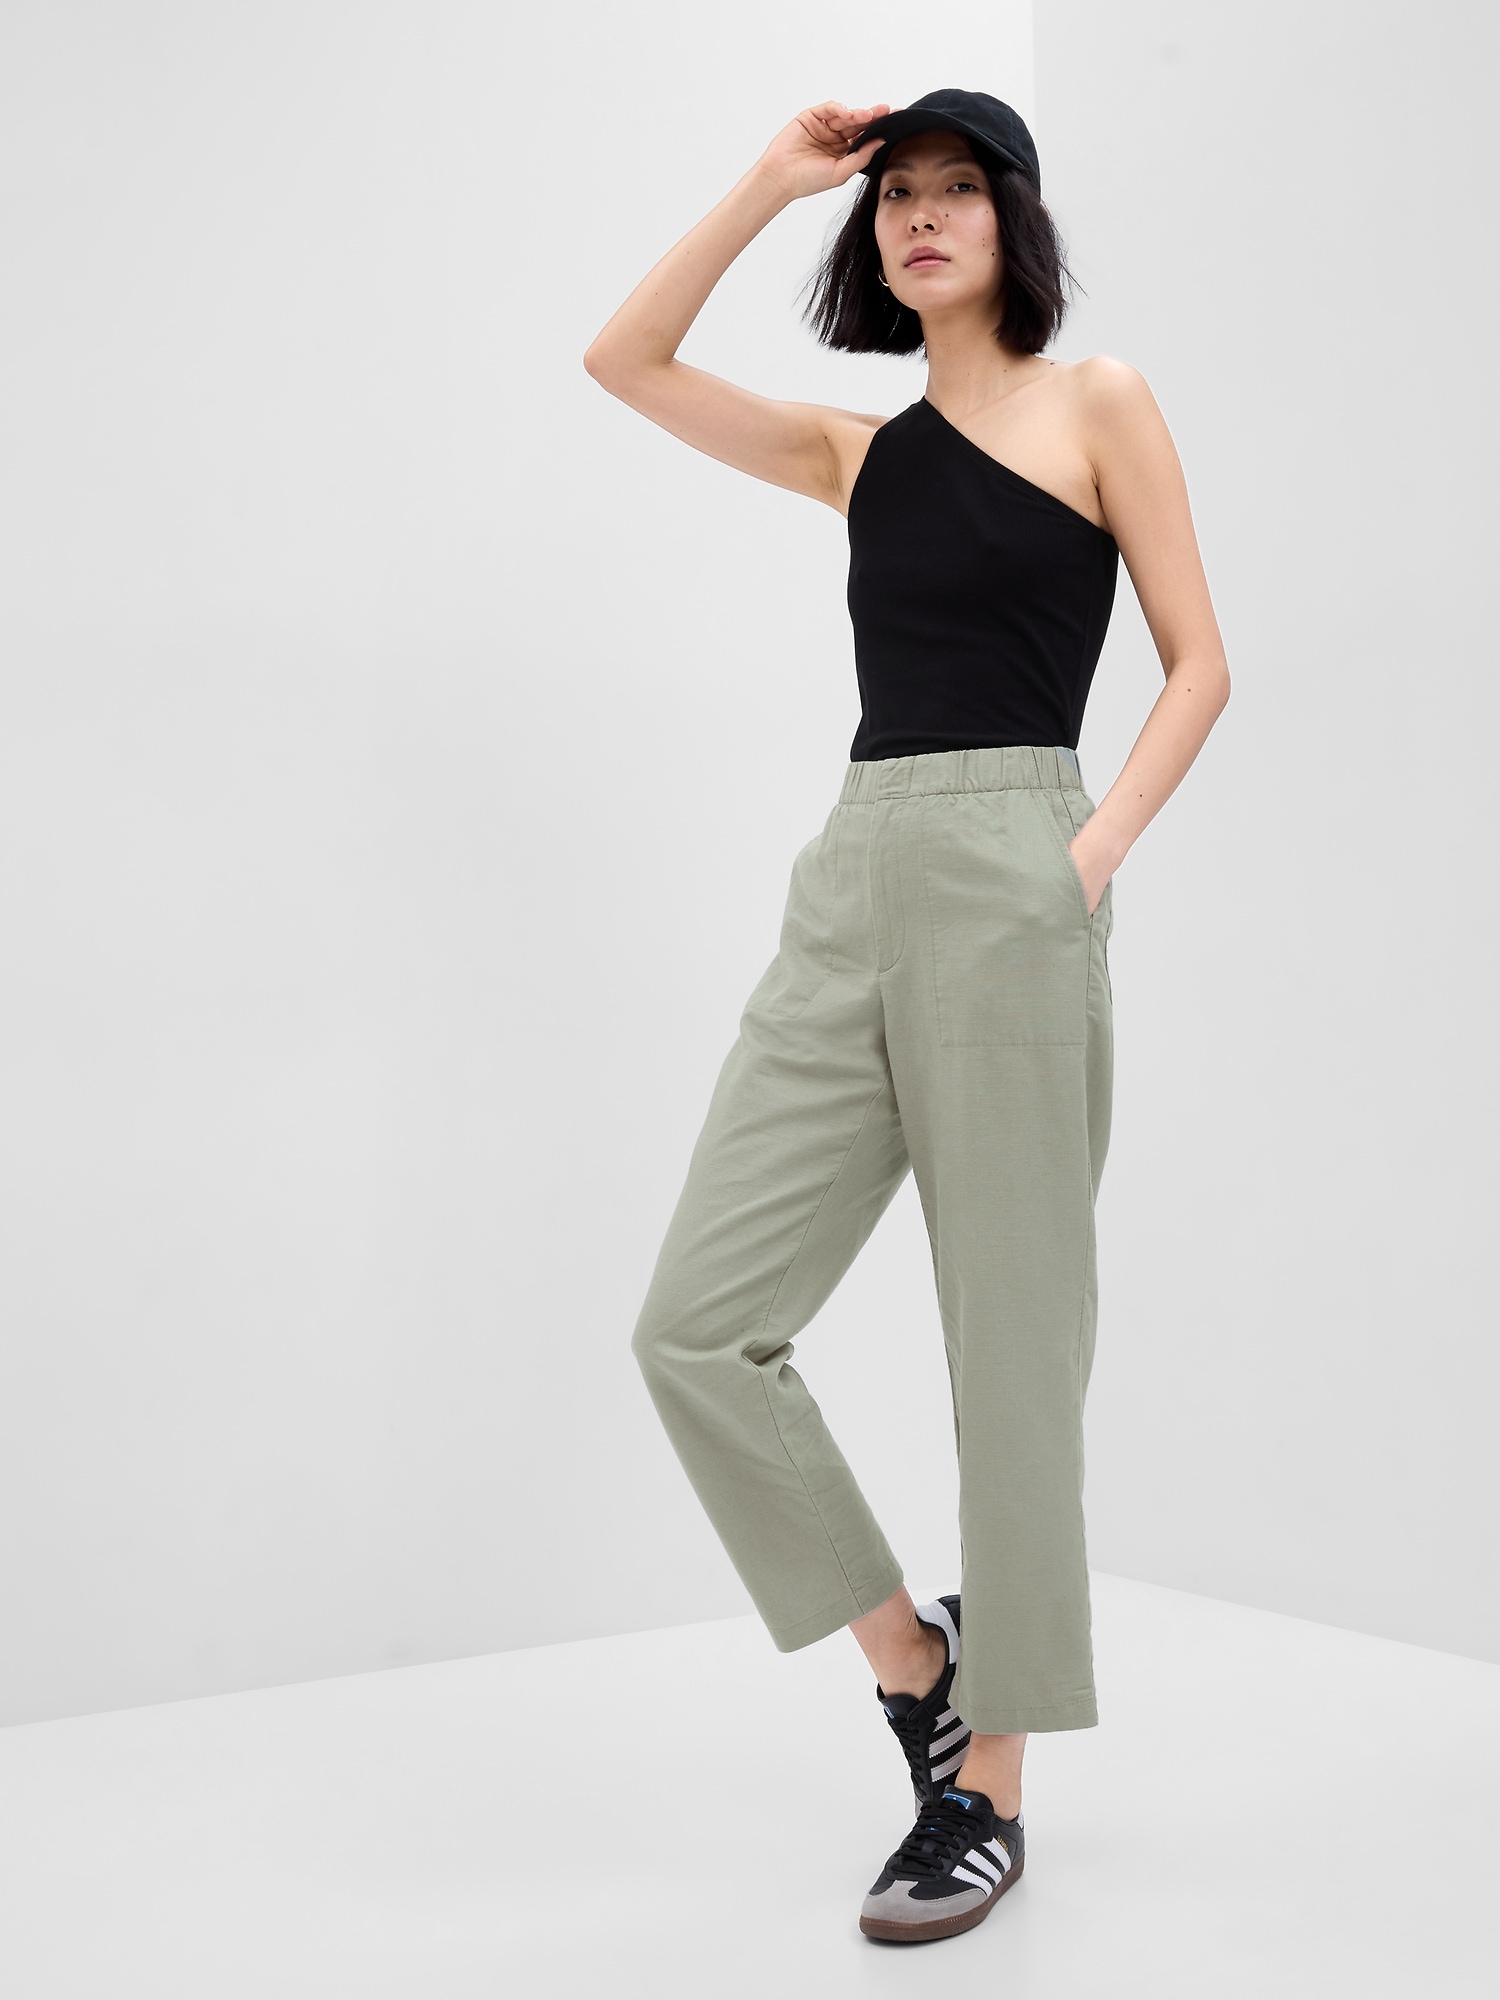 Gap Stretch Women's Pants Size 8 Black Cotton Blend - clothing